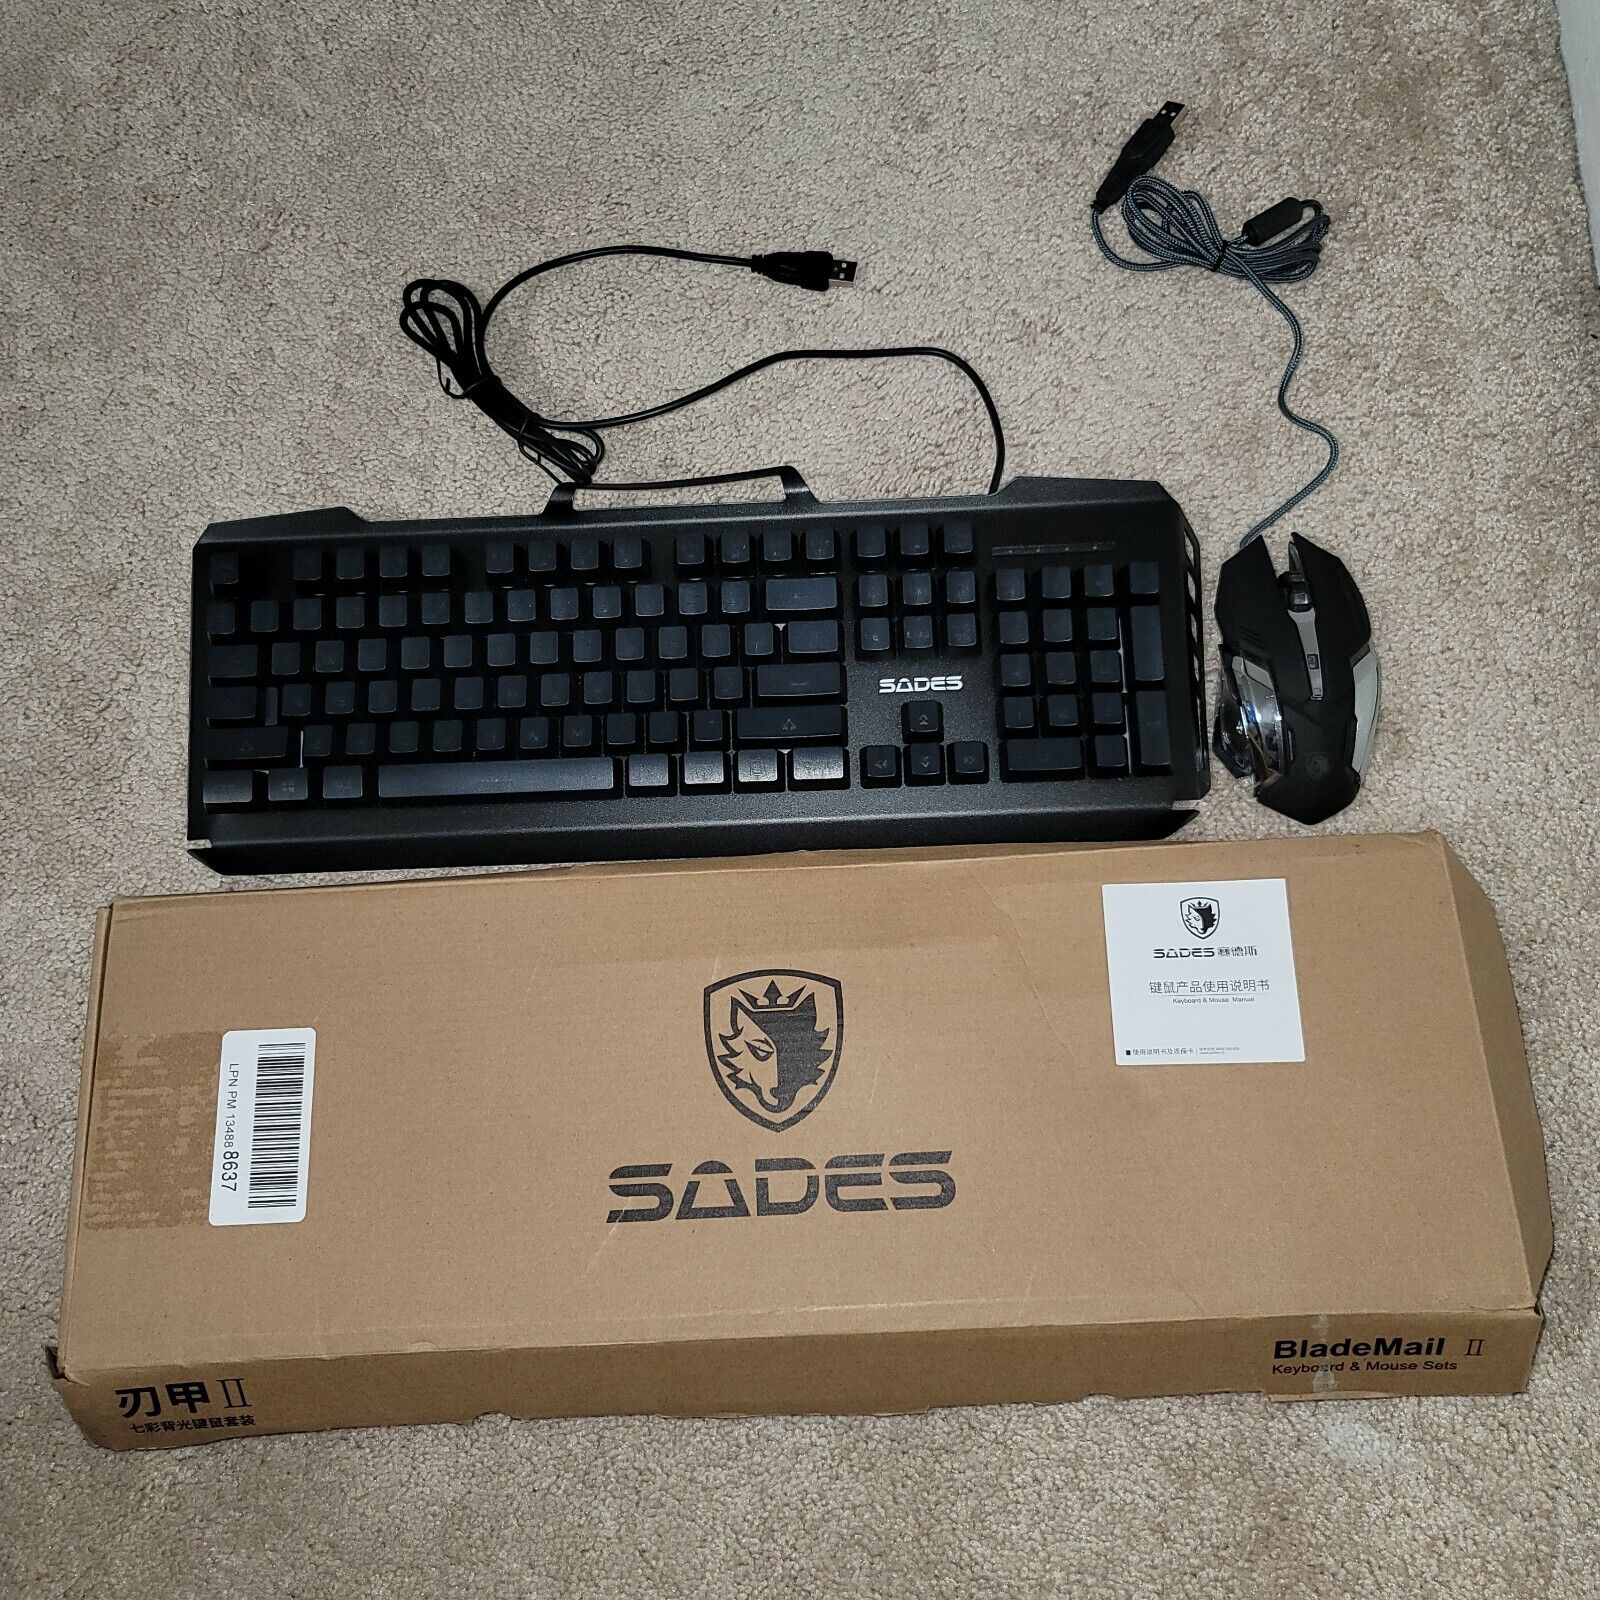 SADES Gaming Mouse and Keyboard, BLADEMAIL II (black) Backlite keyboard